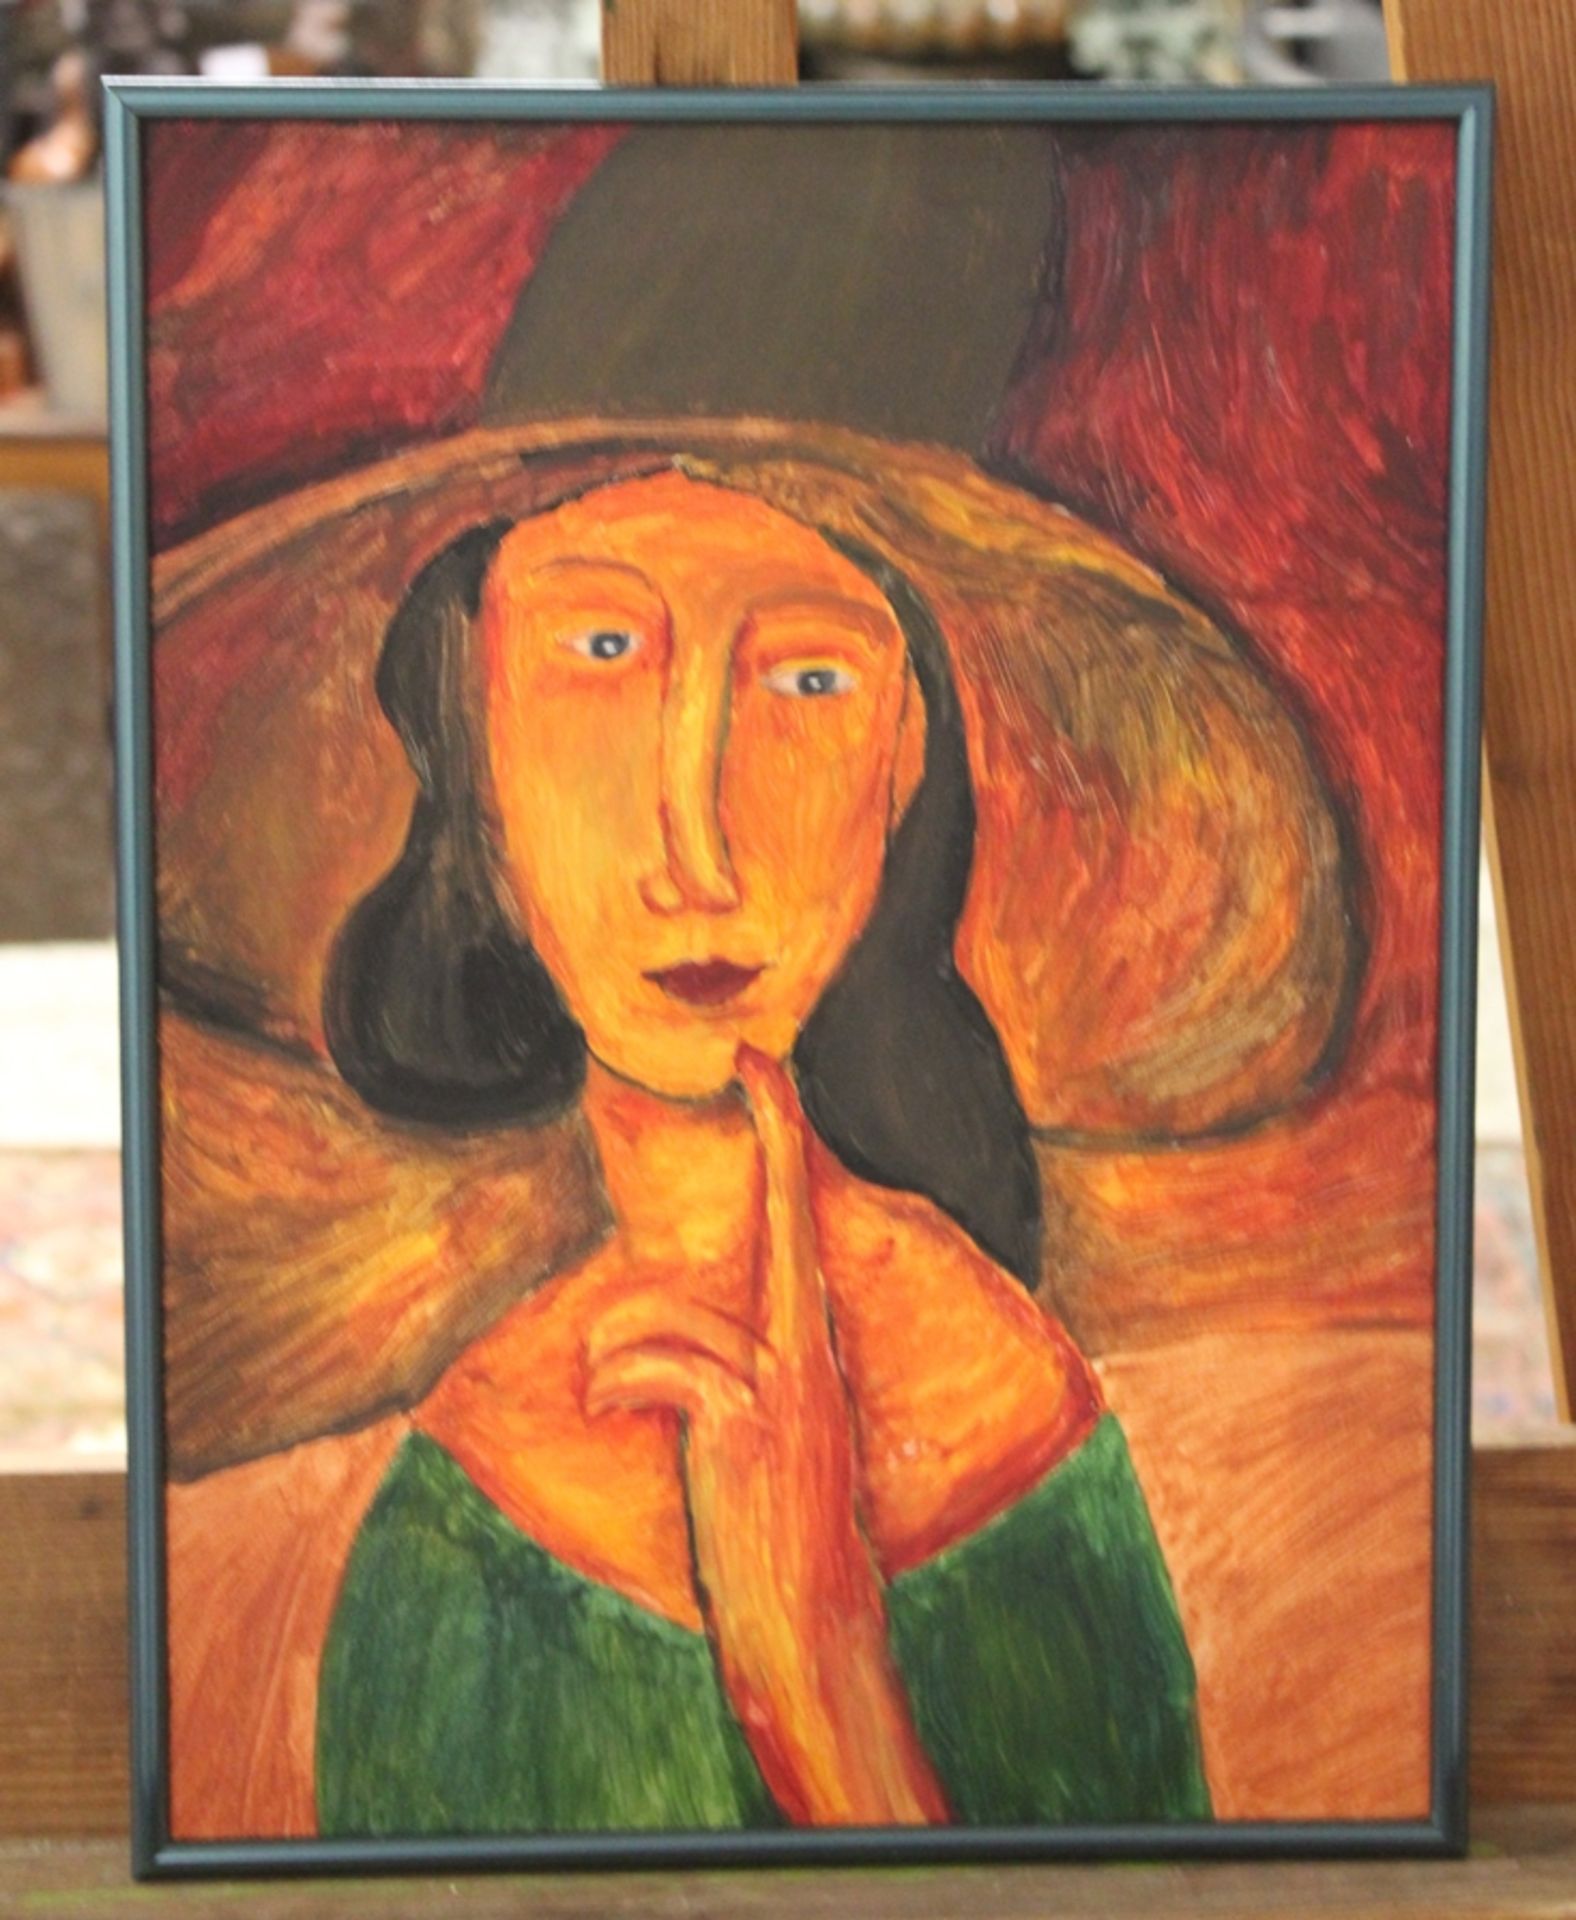 anonyme Kopie nach Modigliani, Dame mit Hut, Öl/Leinwand, gerahmt, RG 41 x 31cm. - Bild 2 aus 4